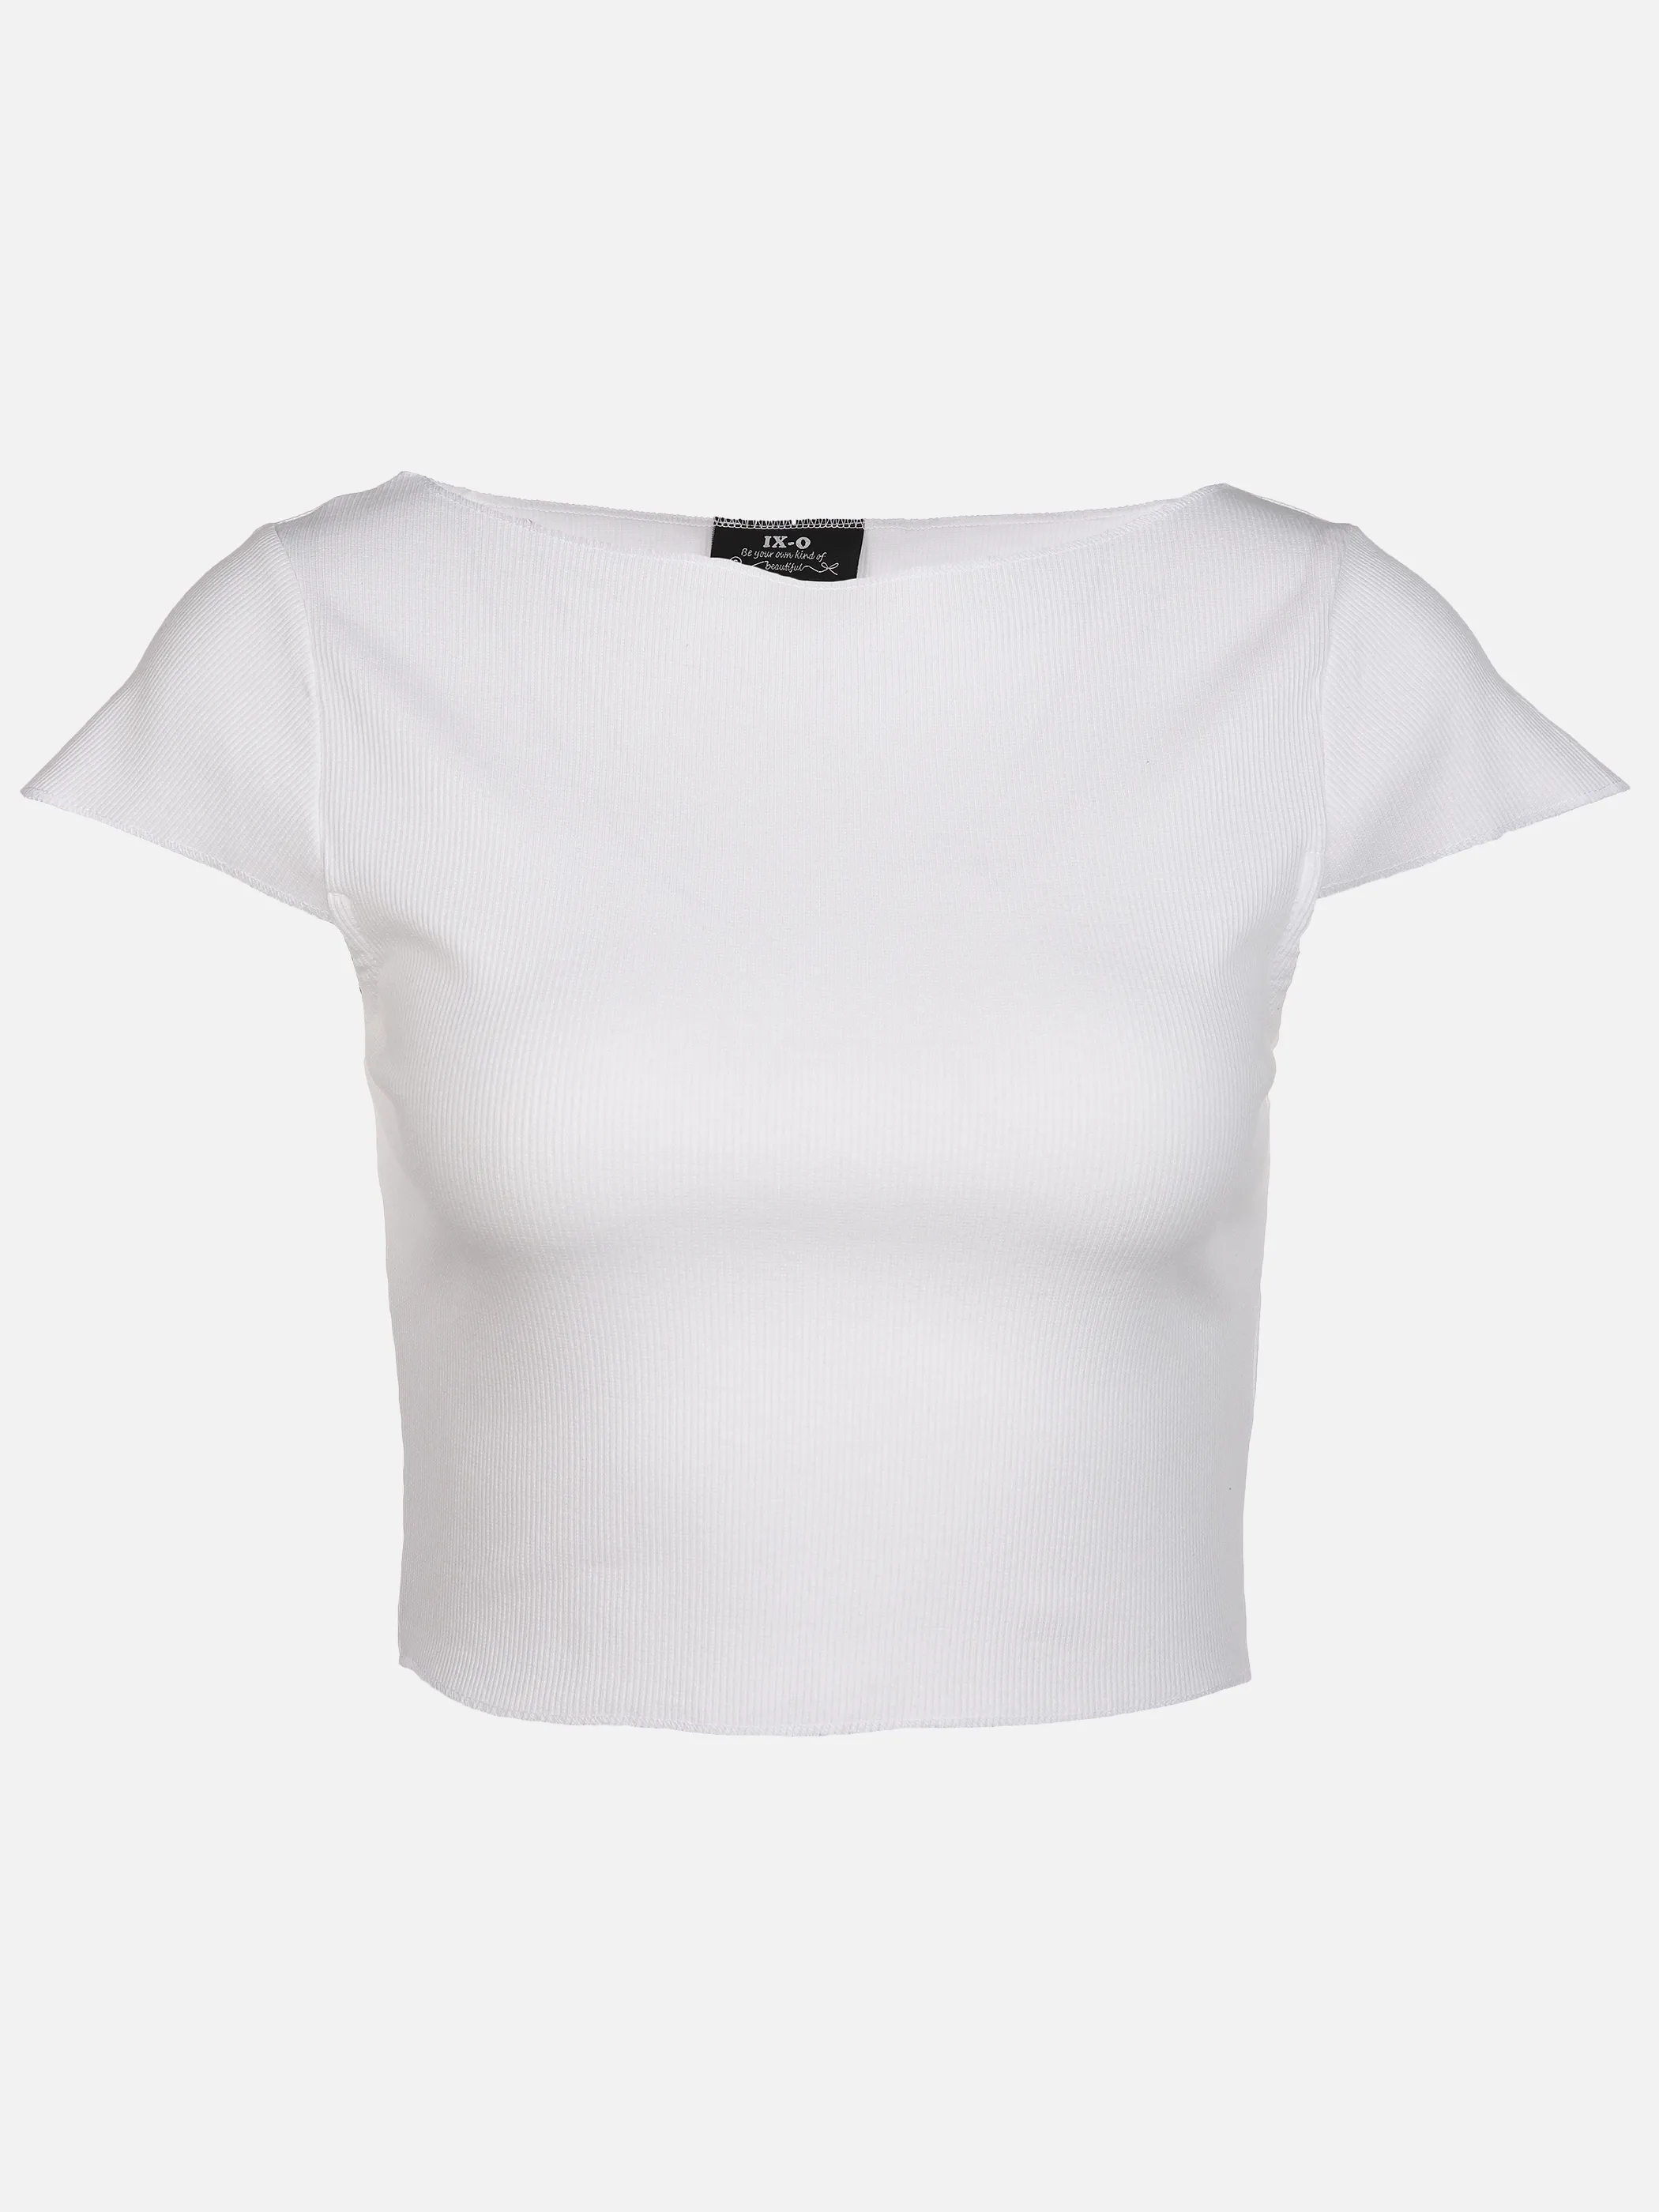 IX-O YF- Da T-Shirt Weiß 890777 WHITE 1